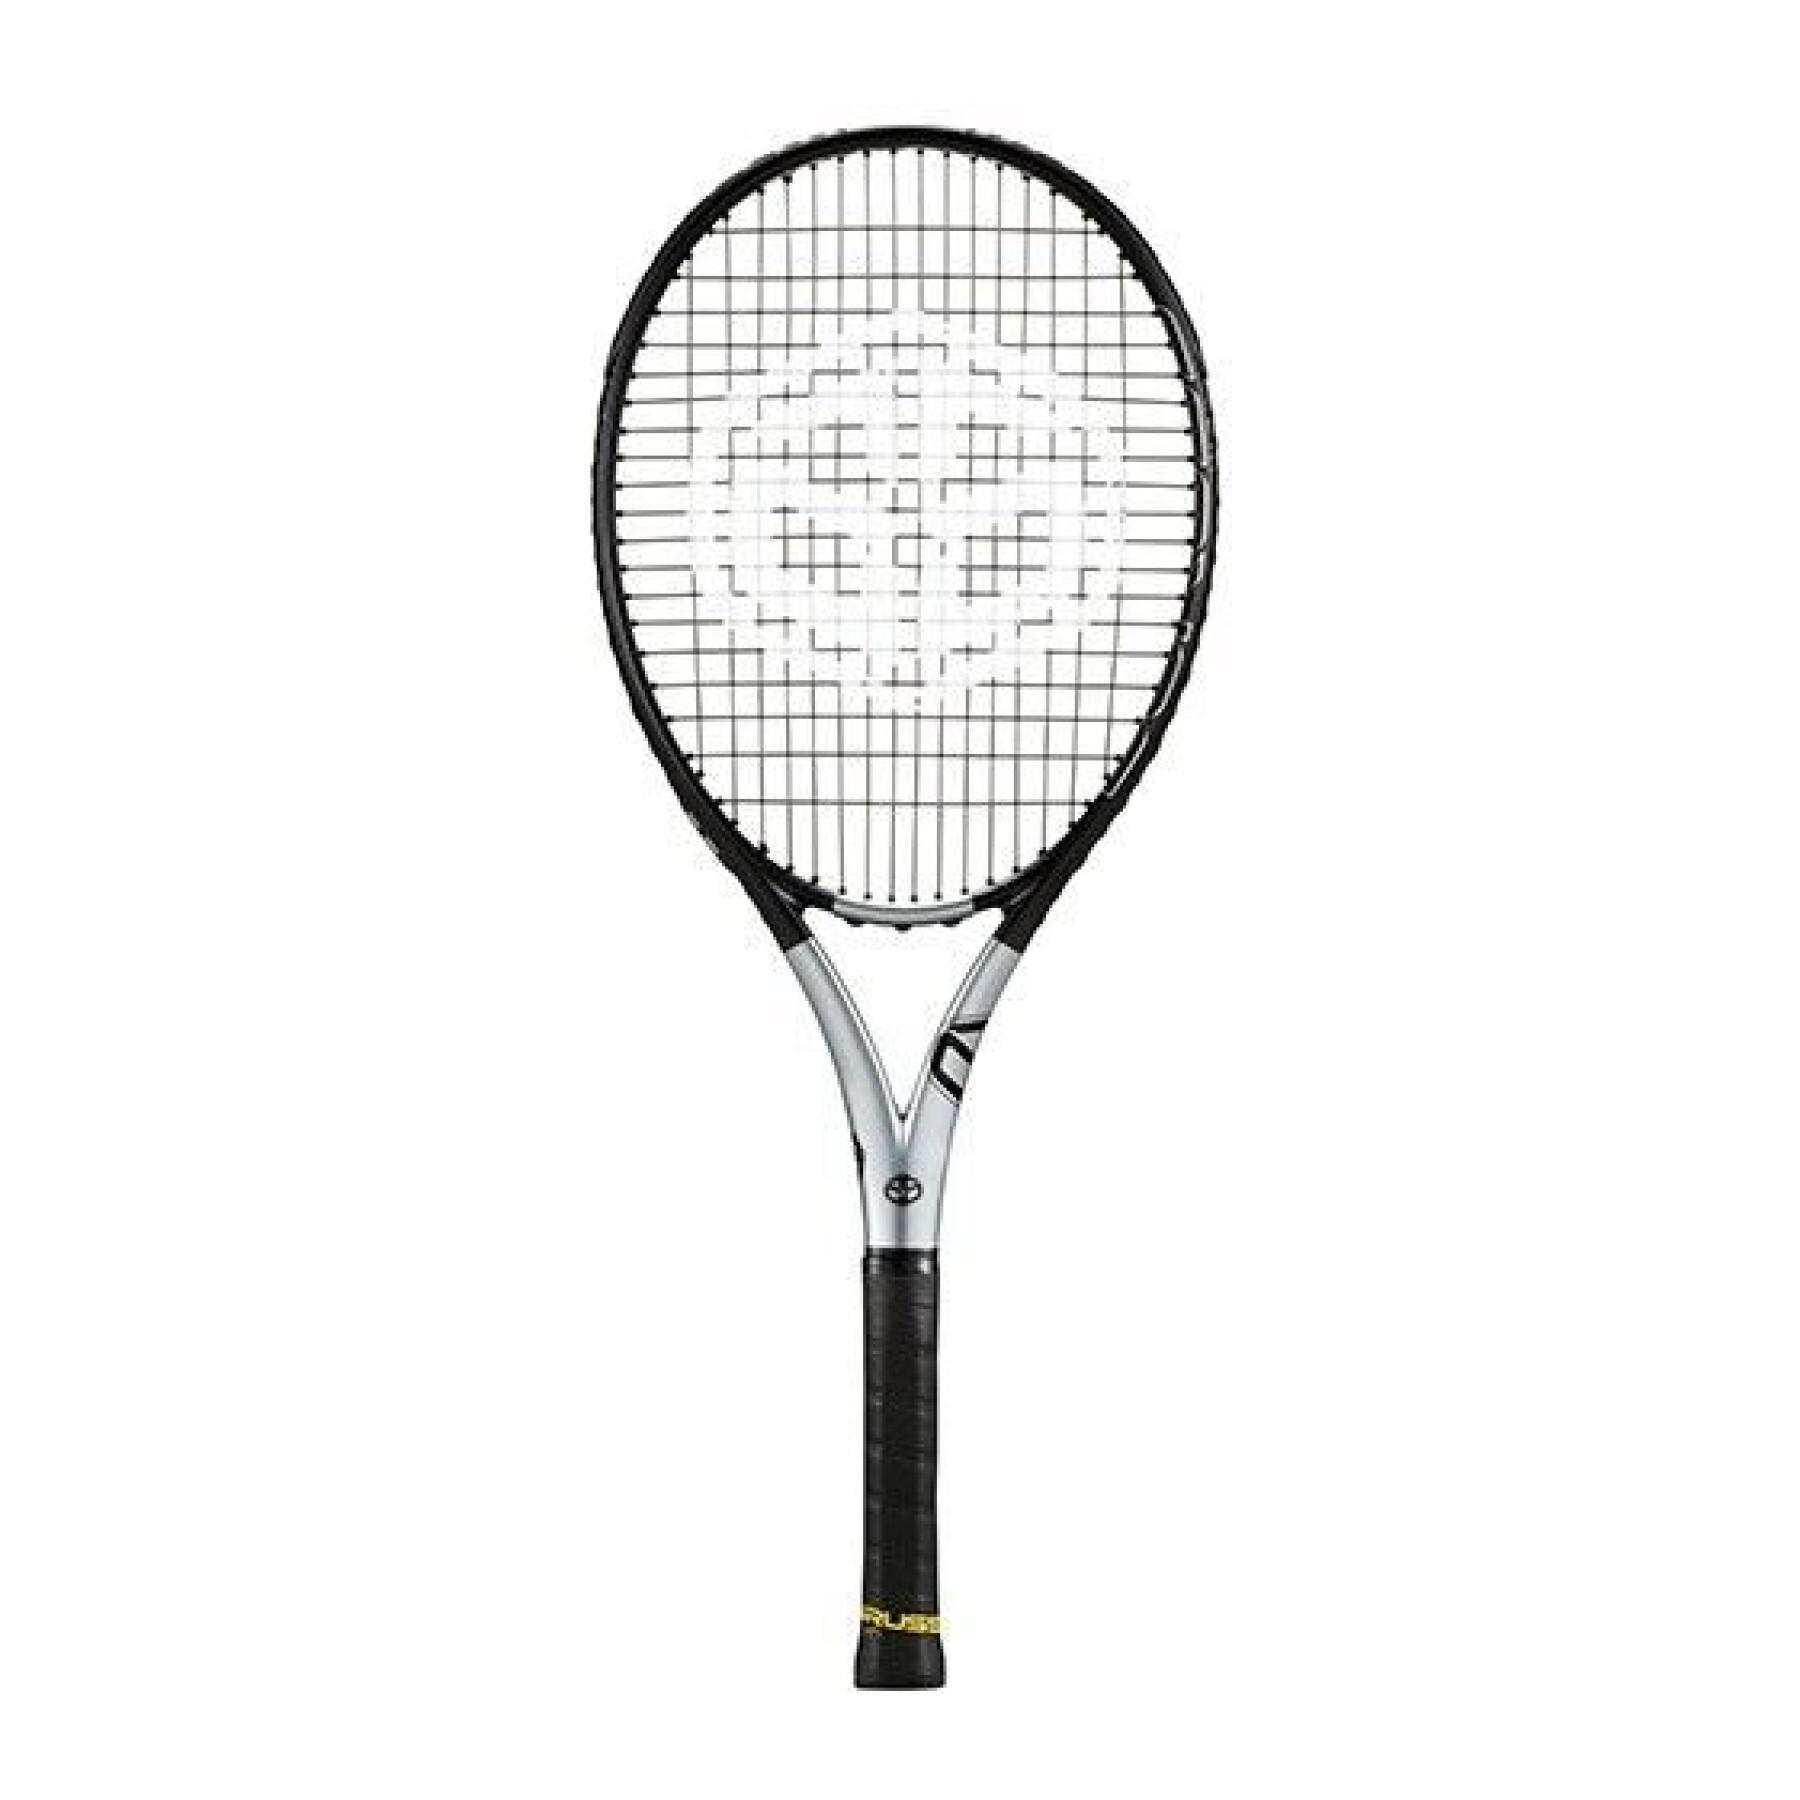 Tennis racket Duruss Ceylonite